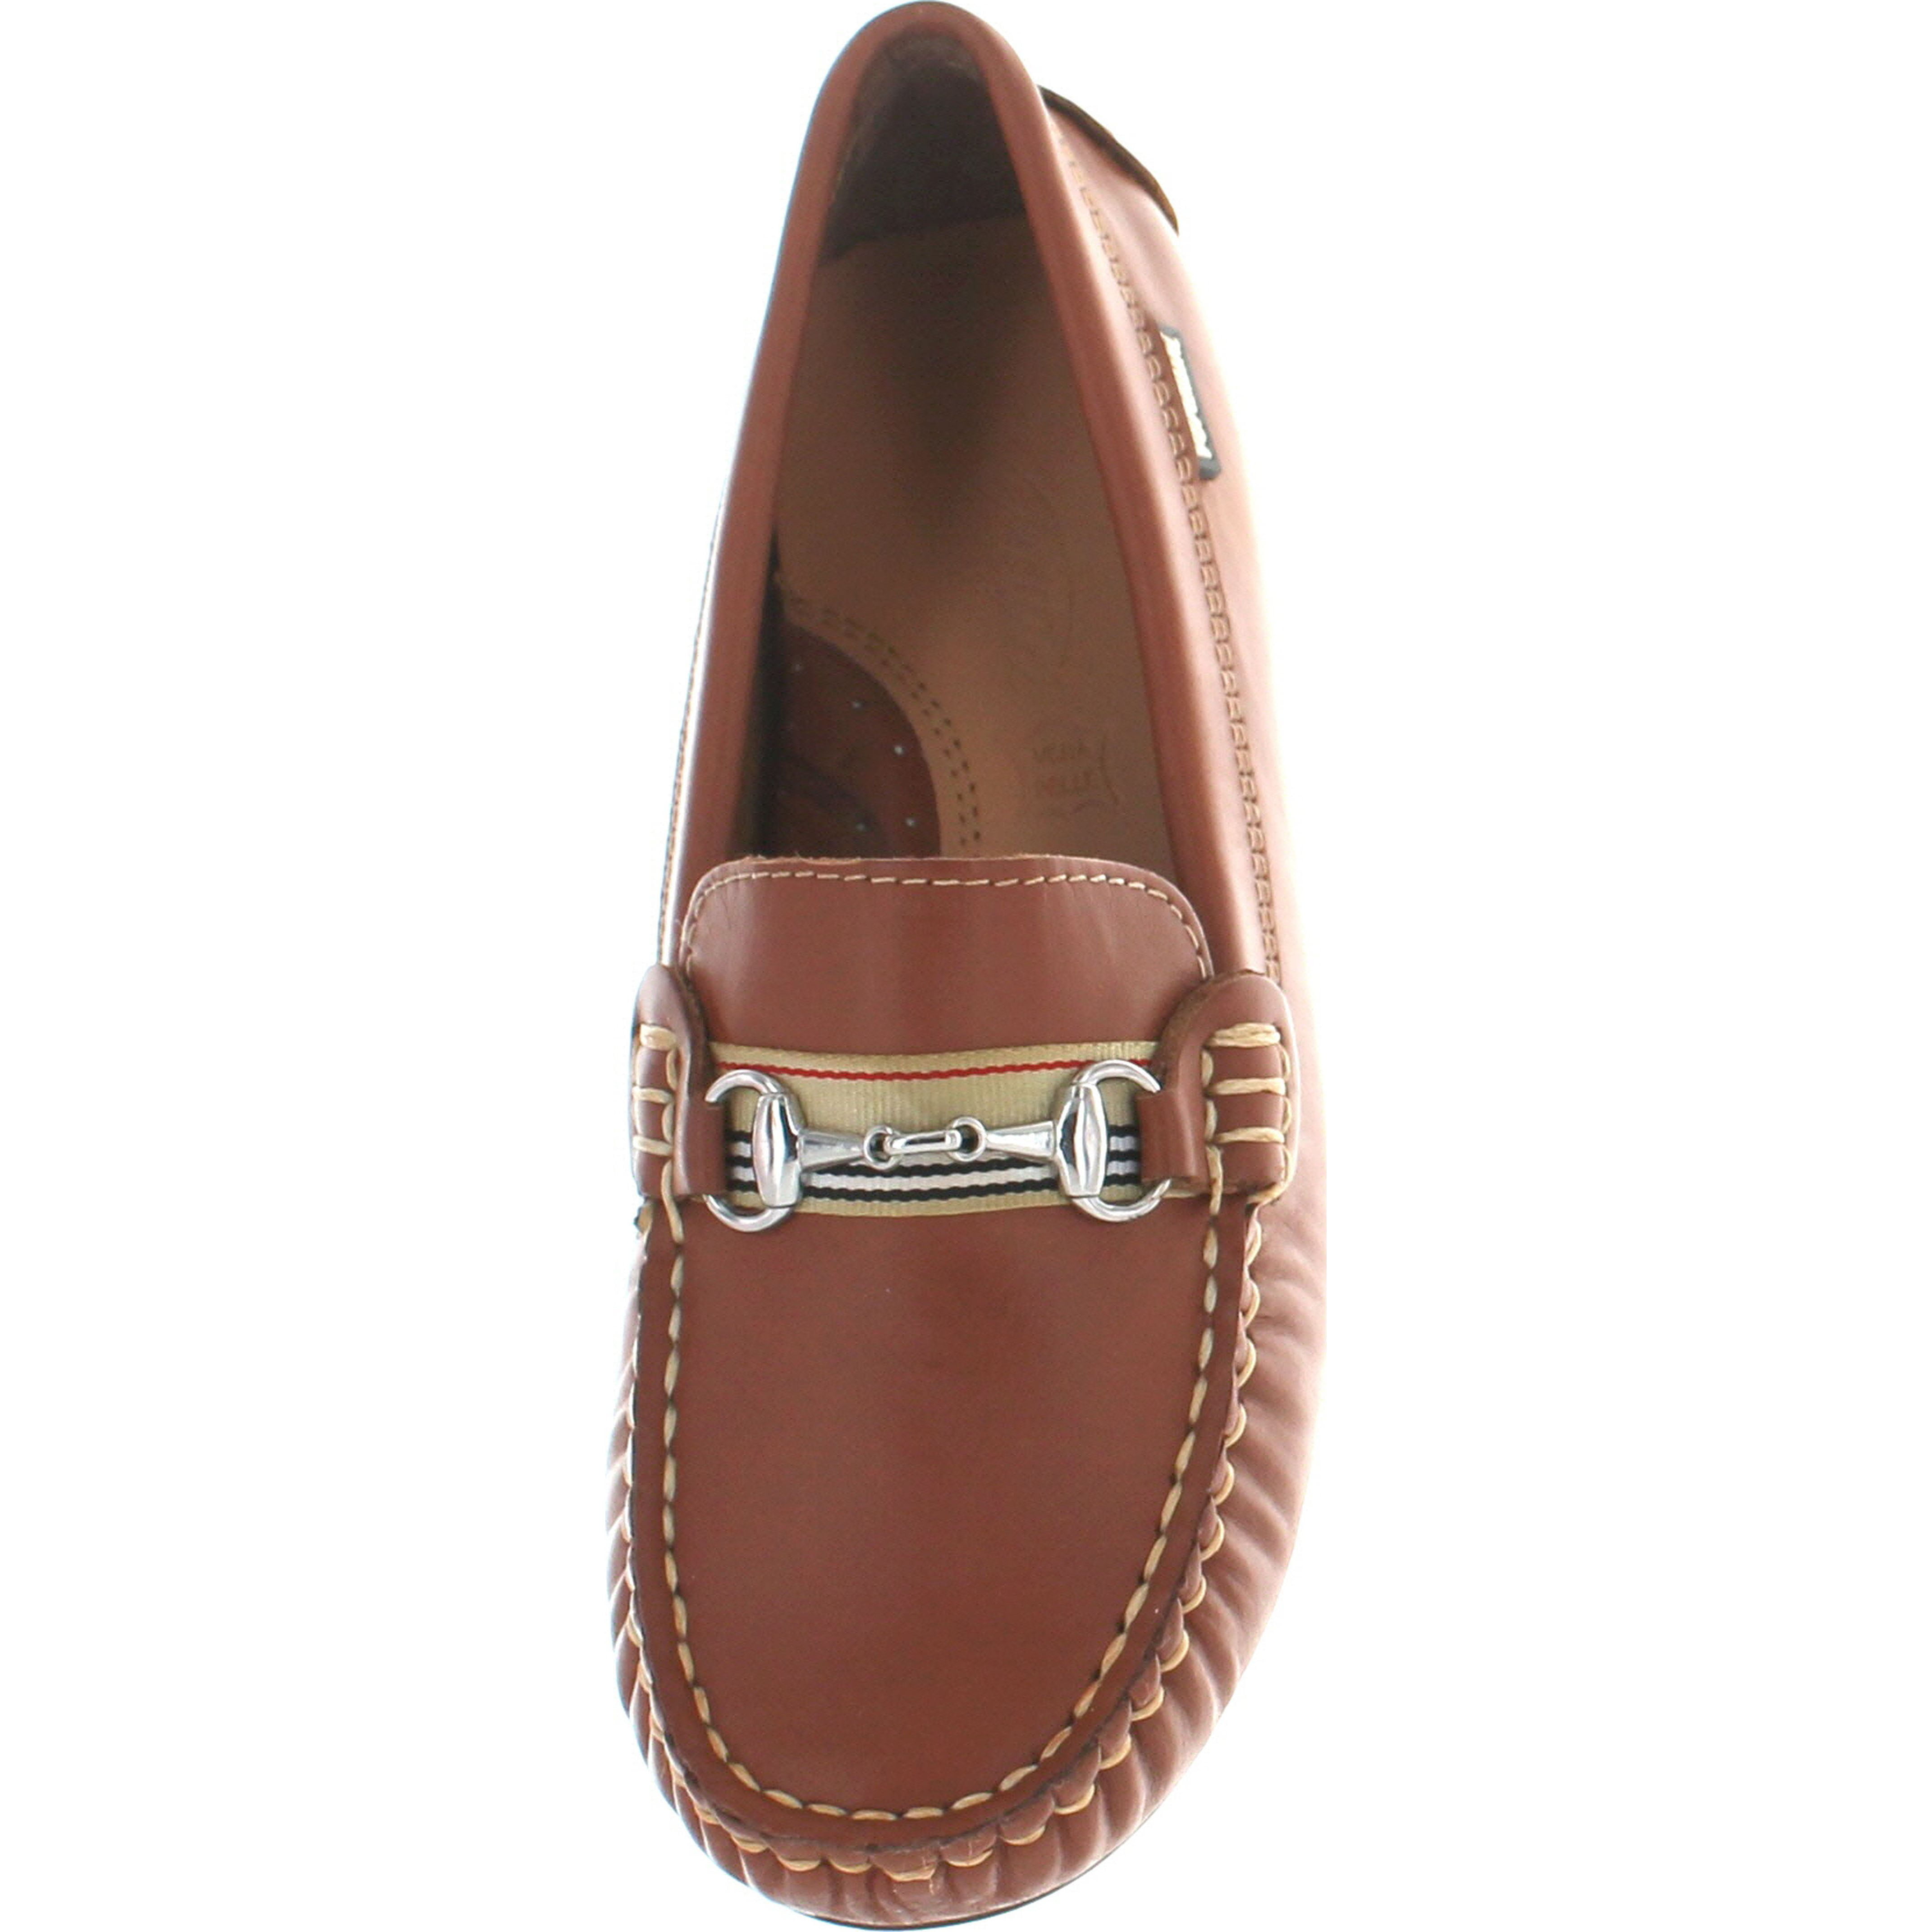 Venettini Boys 55-Toby Designer Buckle Slip On Casual Dress Loafers Shoes 